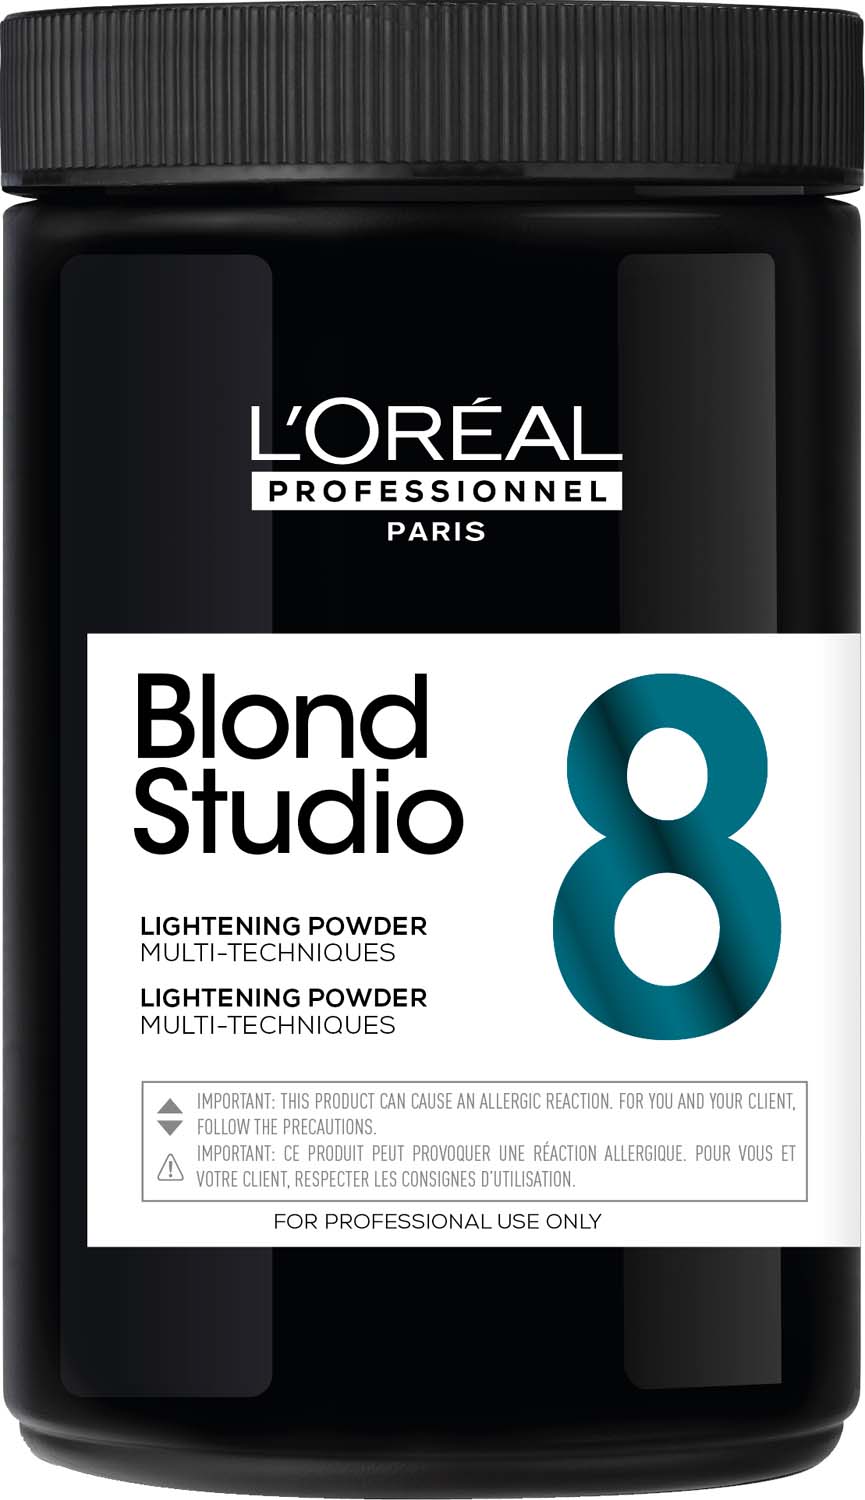 Blond Studio 8 Multi Tech Powder, 500g